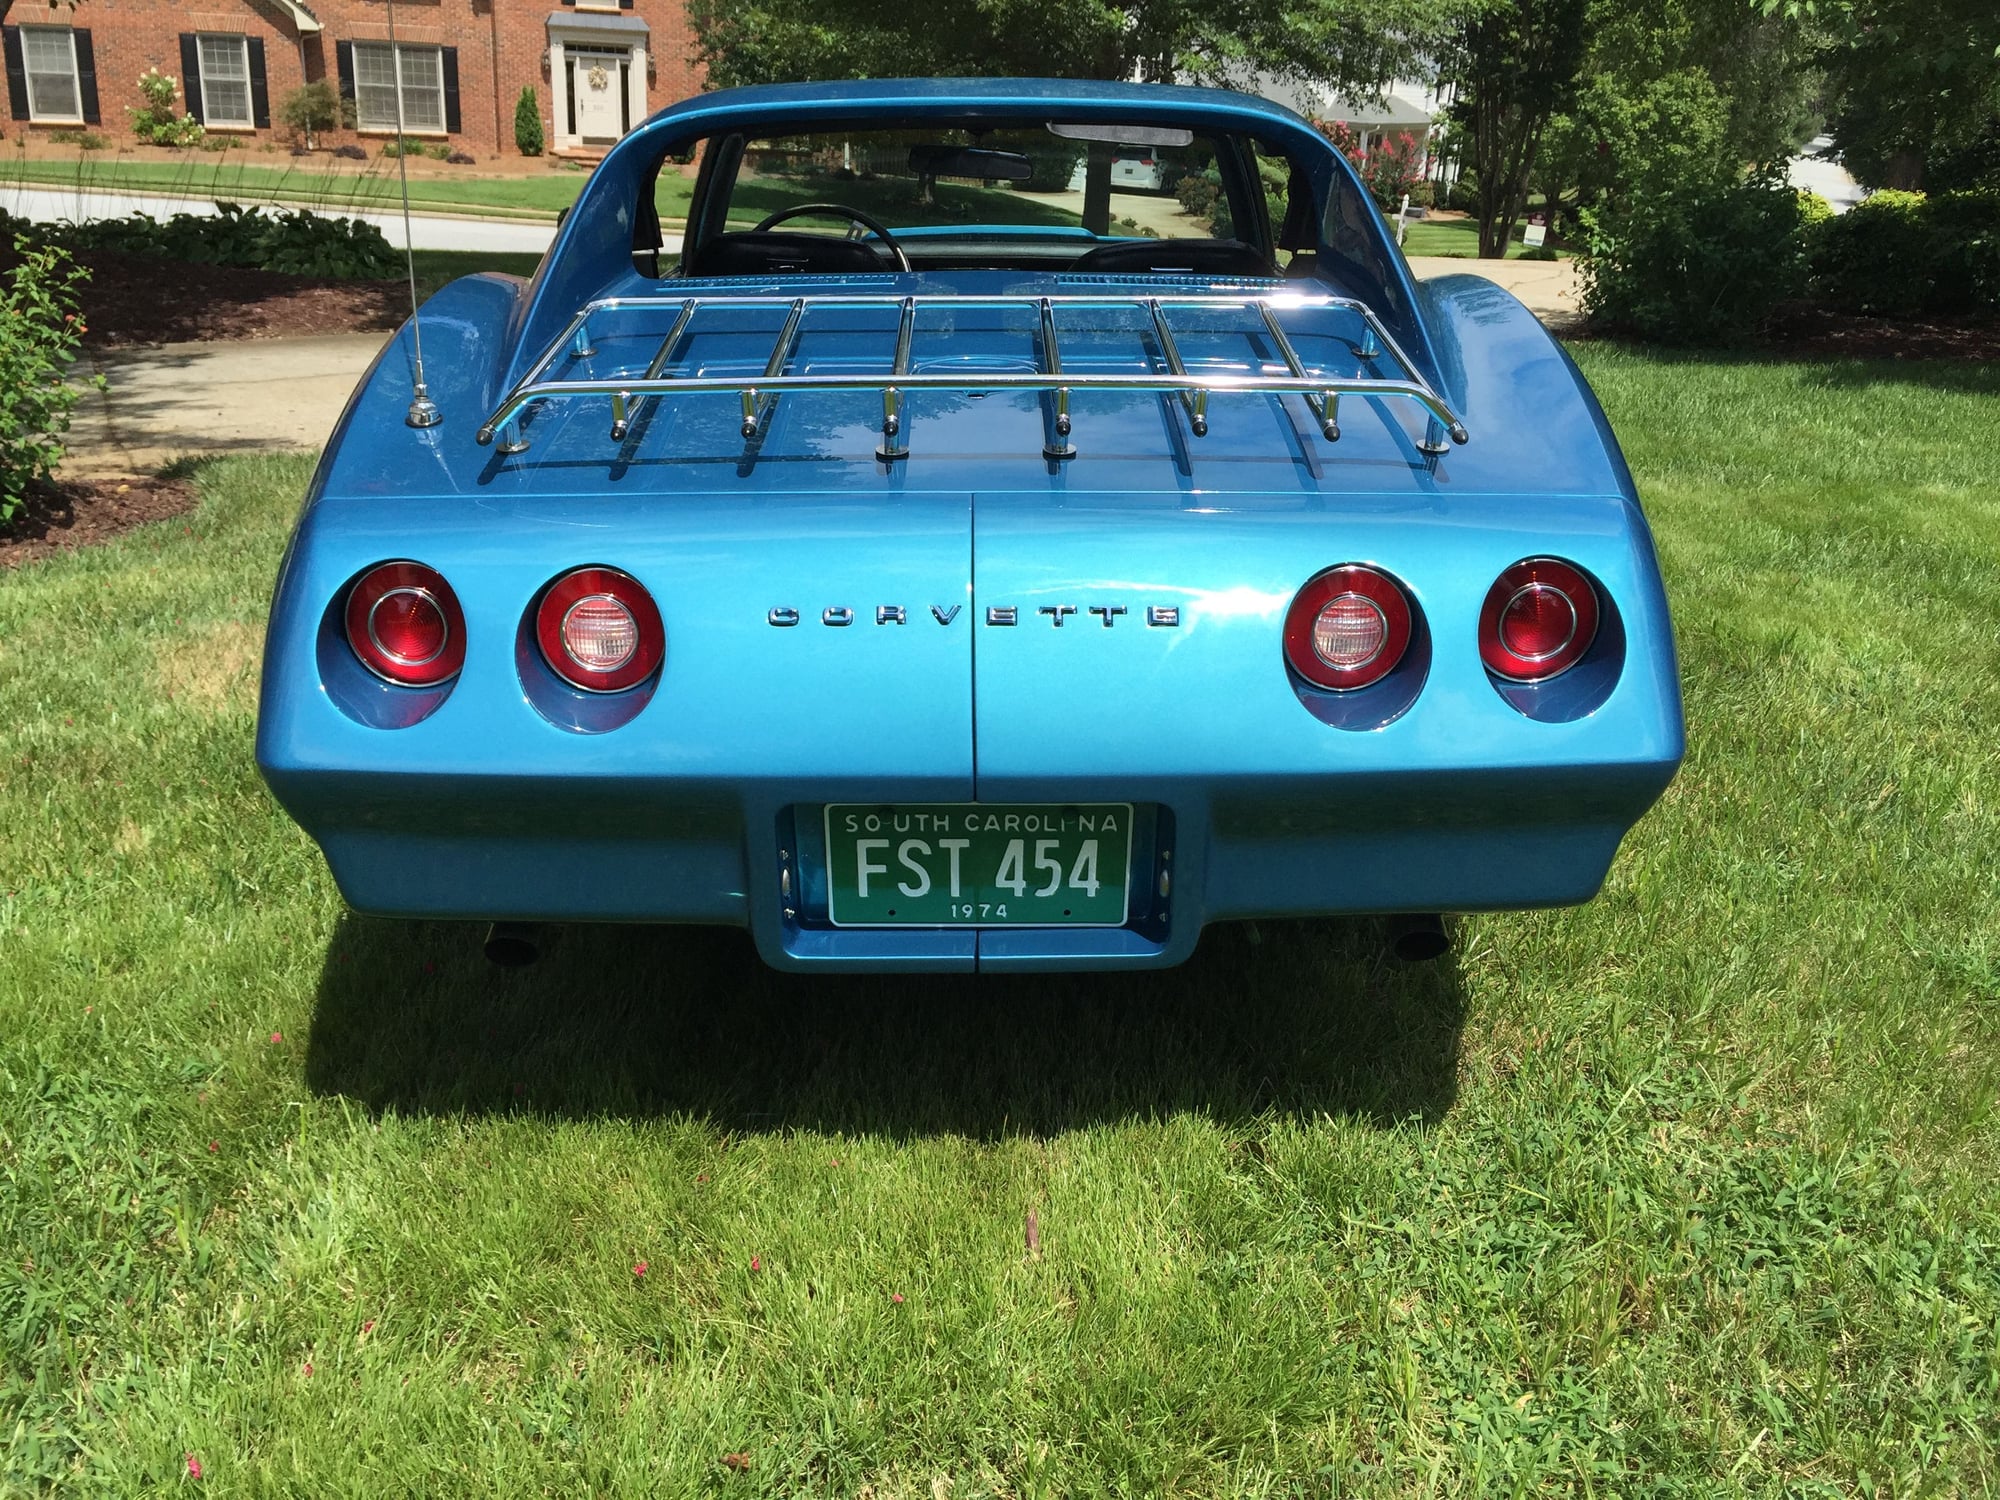 For Sale: C3 tail lights - CorvetteForum - Chevrolet Corvette Forum